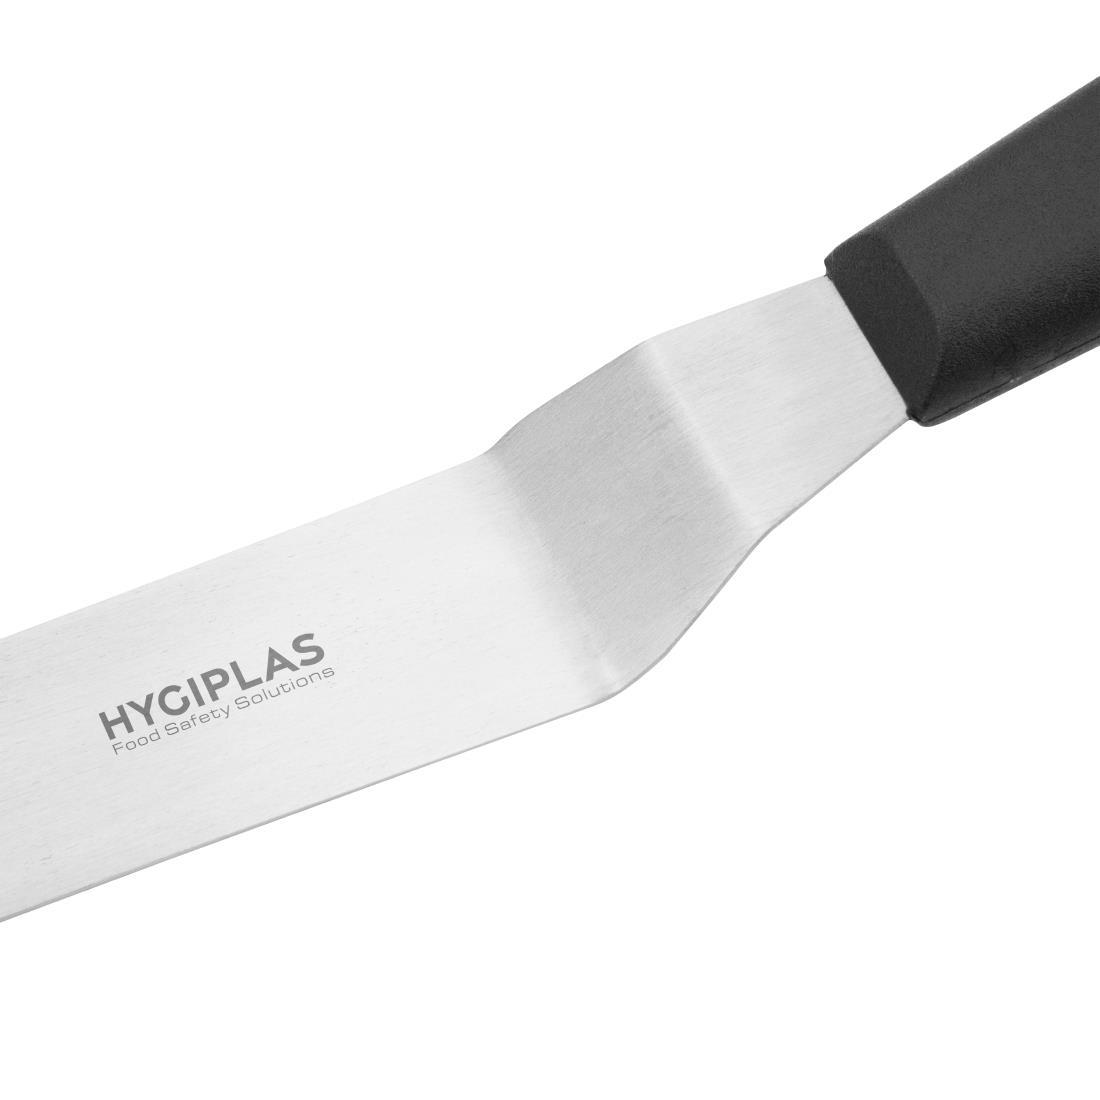 Hygiplas Angled Blade Palette Knife Black 19cm - D410  - 3